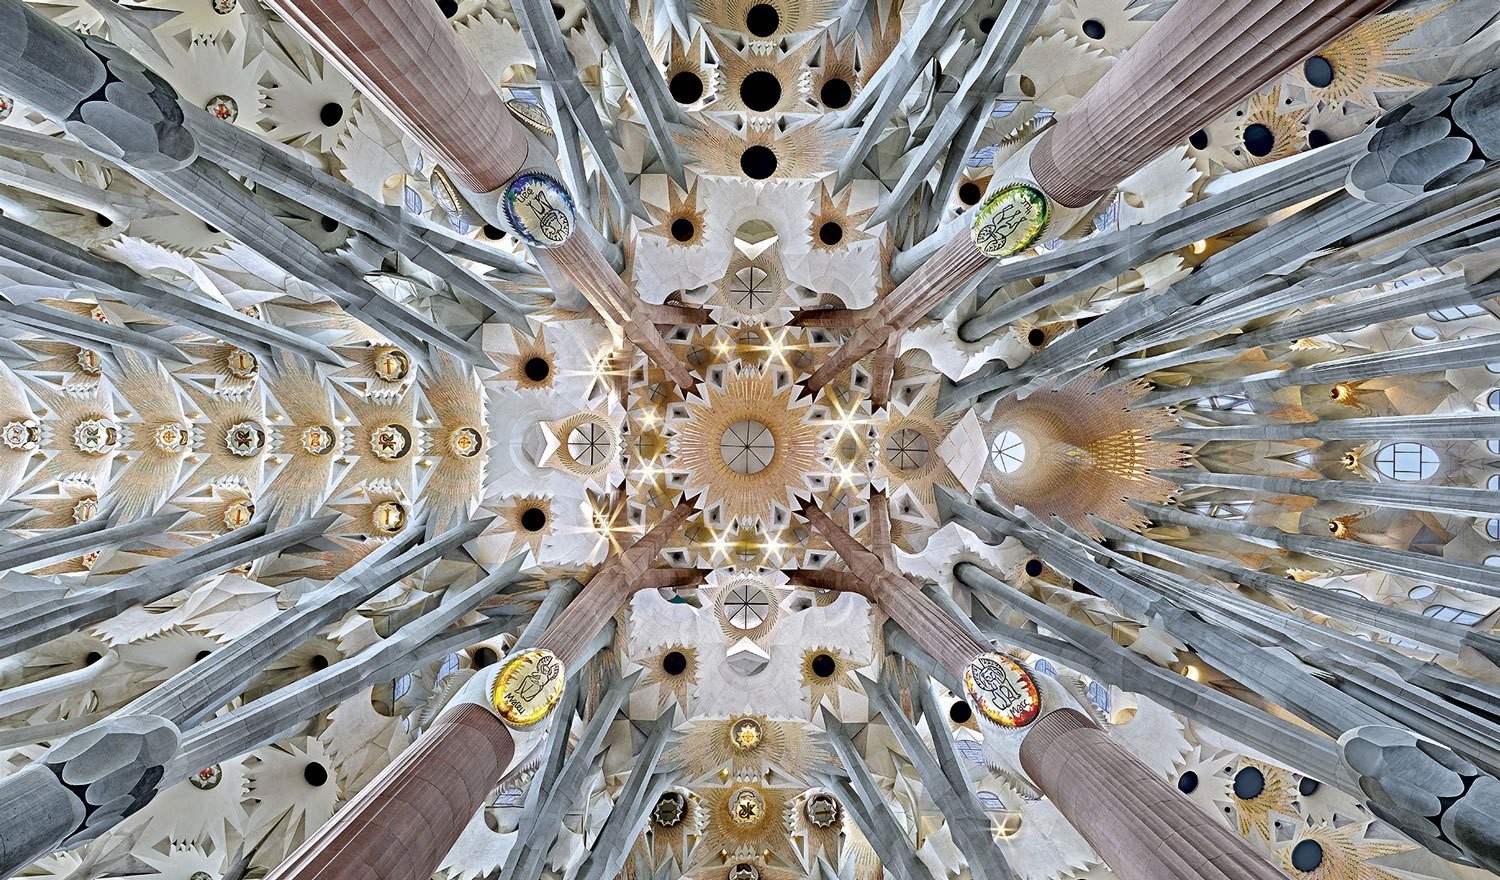 Photo book: Sagrada Familia, Gaudí's masterpiece